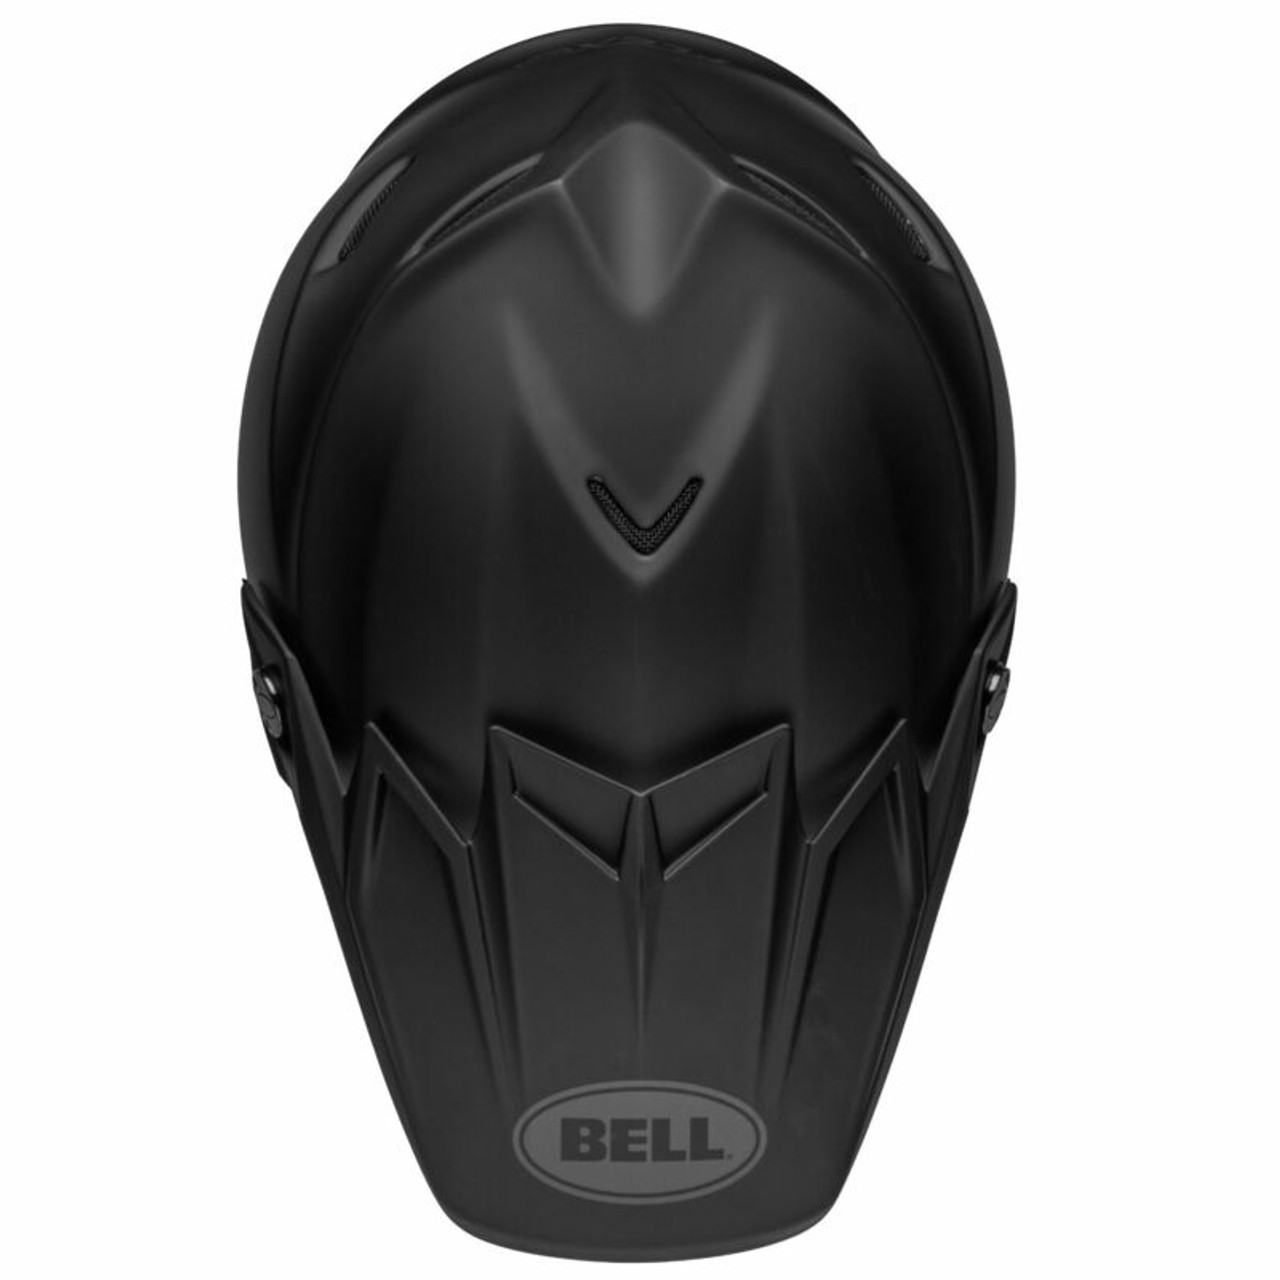 Bell Moto 9-S Flex Helmet Review at SpeedAddicts.com 